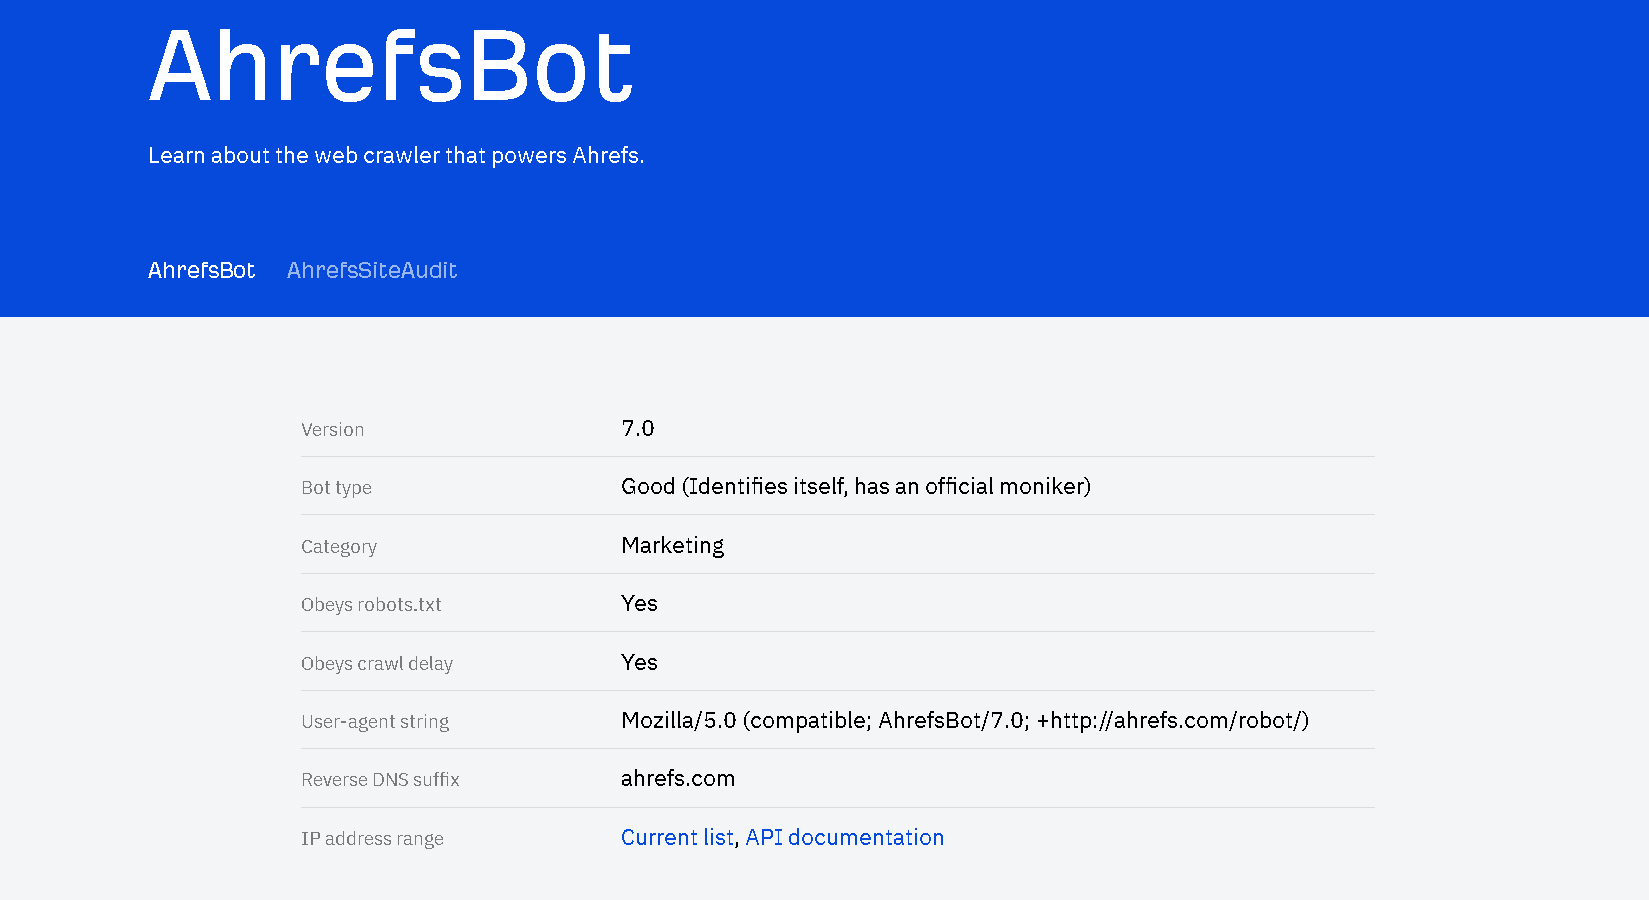 Ahrefs bot official info from Ahrefs